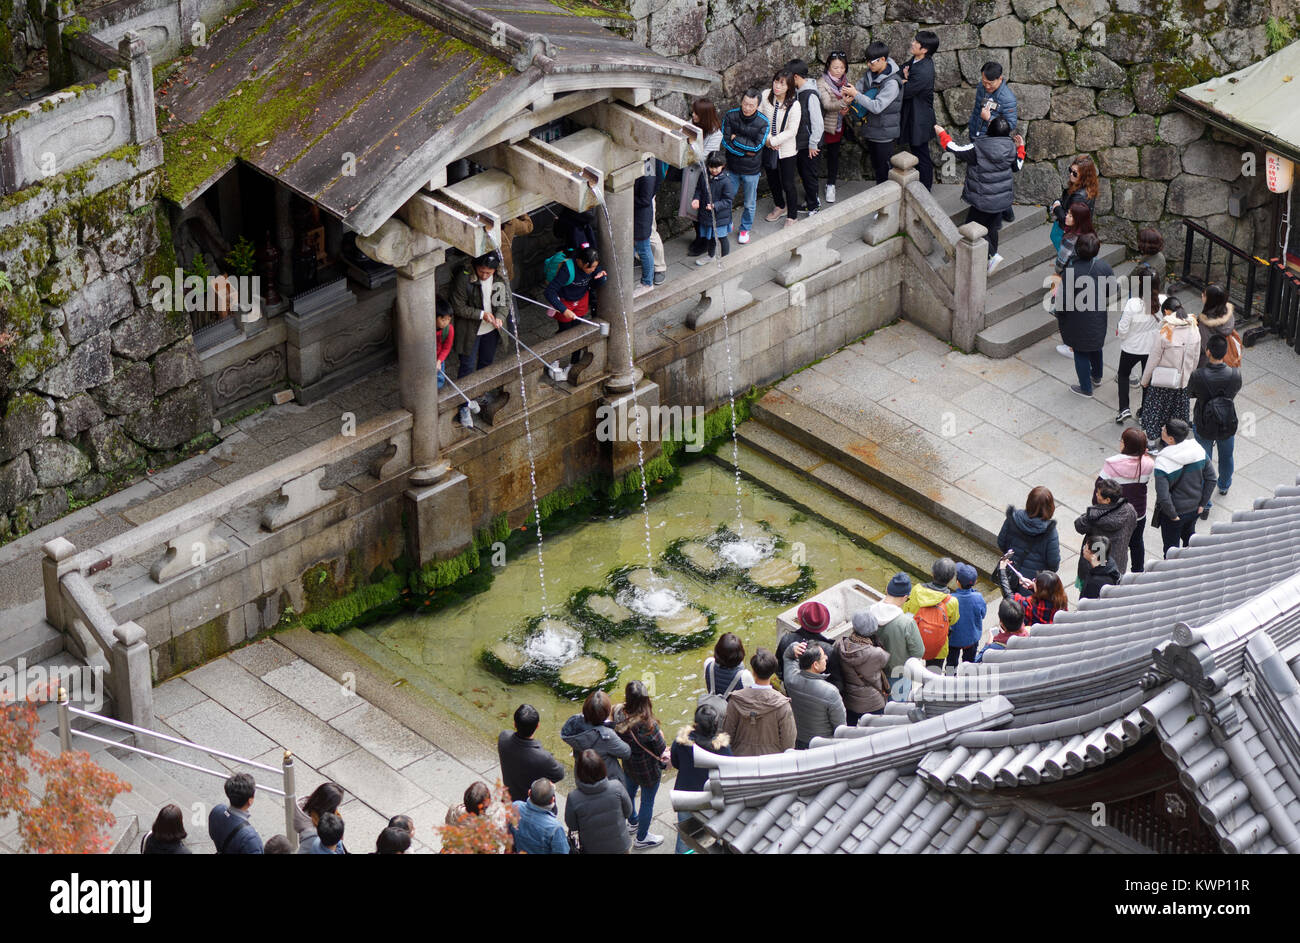 Lizenz und Drucke bei MaximImages.com - Kiyomizu-dera, Kyoto, Japan Reise Stock Foto Stockfoto